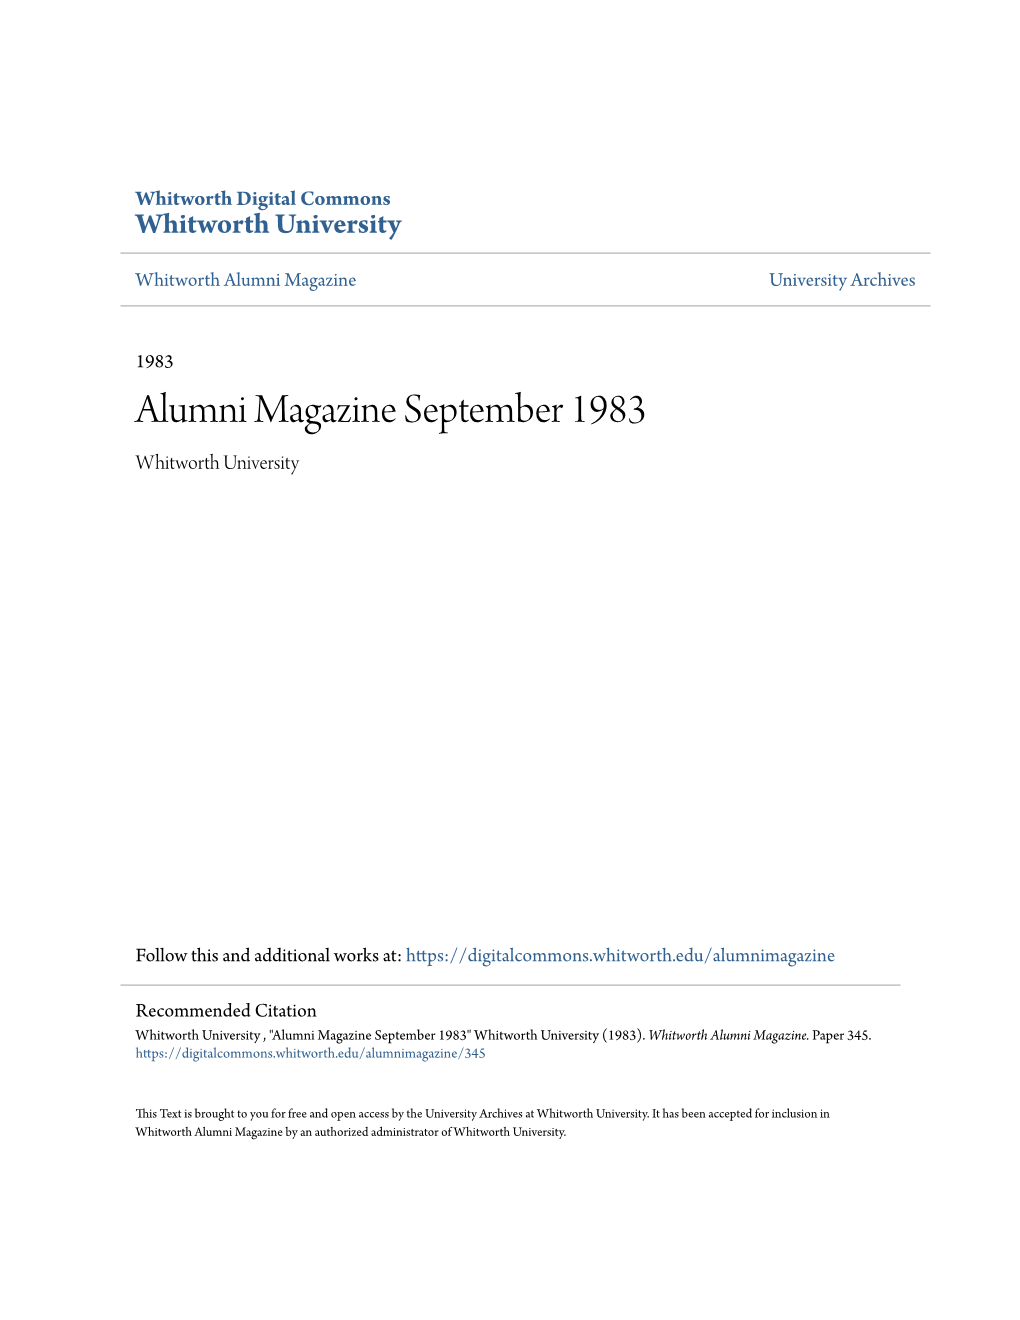 Alumni Magazine September 1983 Whitworth University